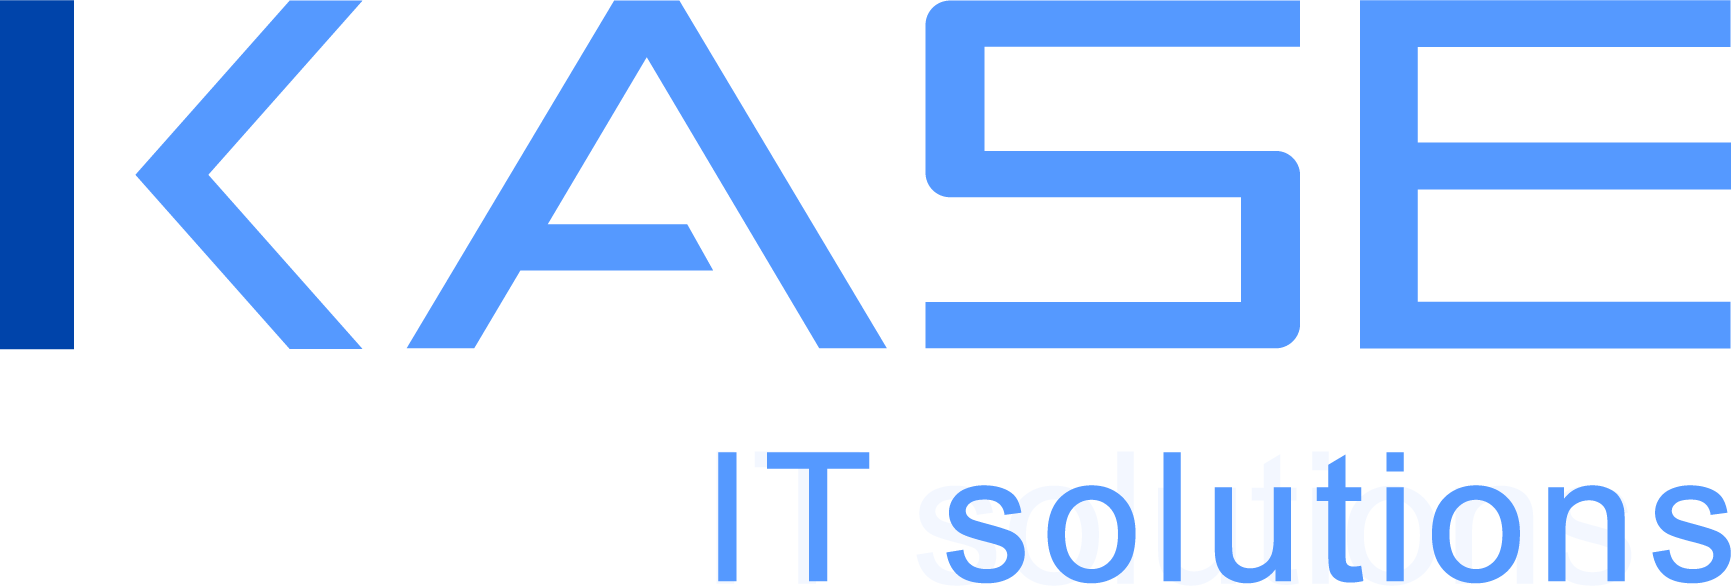 KASE Technology Education T.S.Company